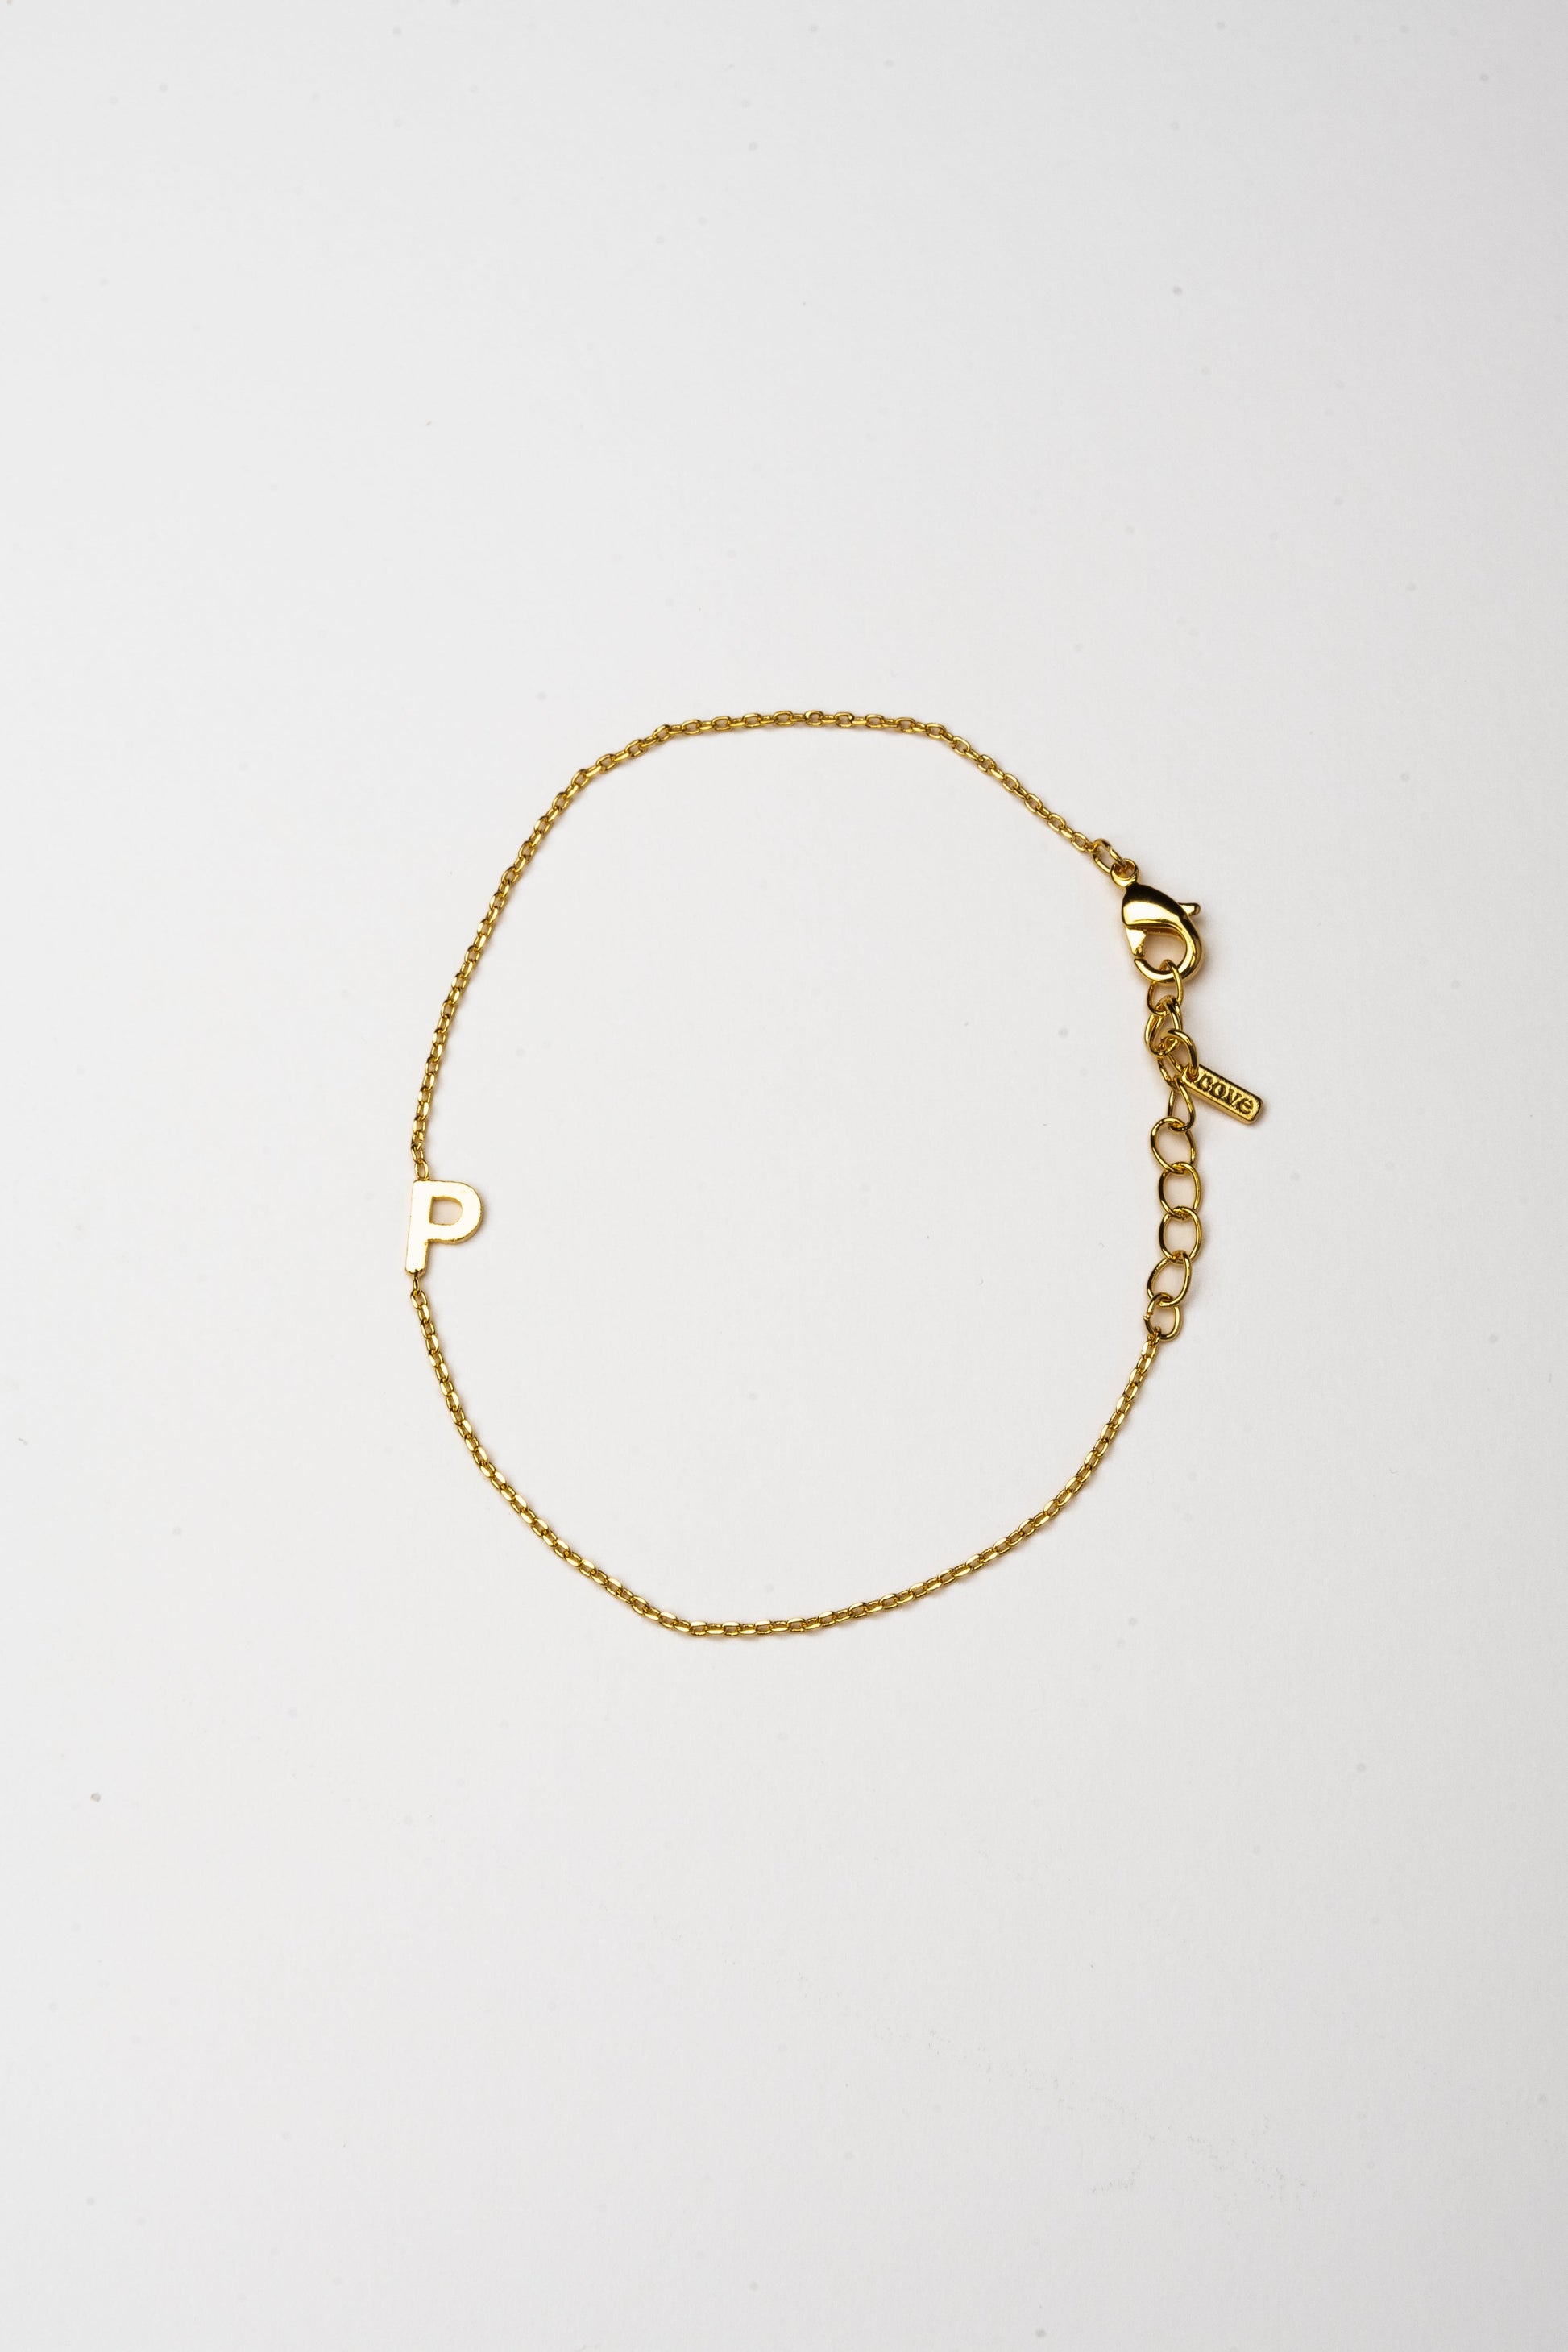 Cove Initial Bracelet WOMEN'S BRACELET Cove Accessories 18k Gold Plated 7" + 1" extender P